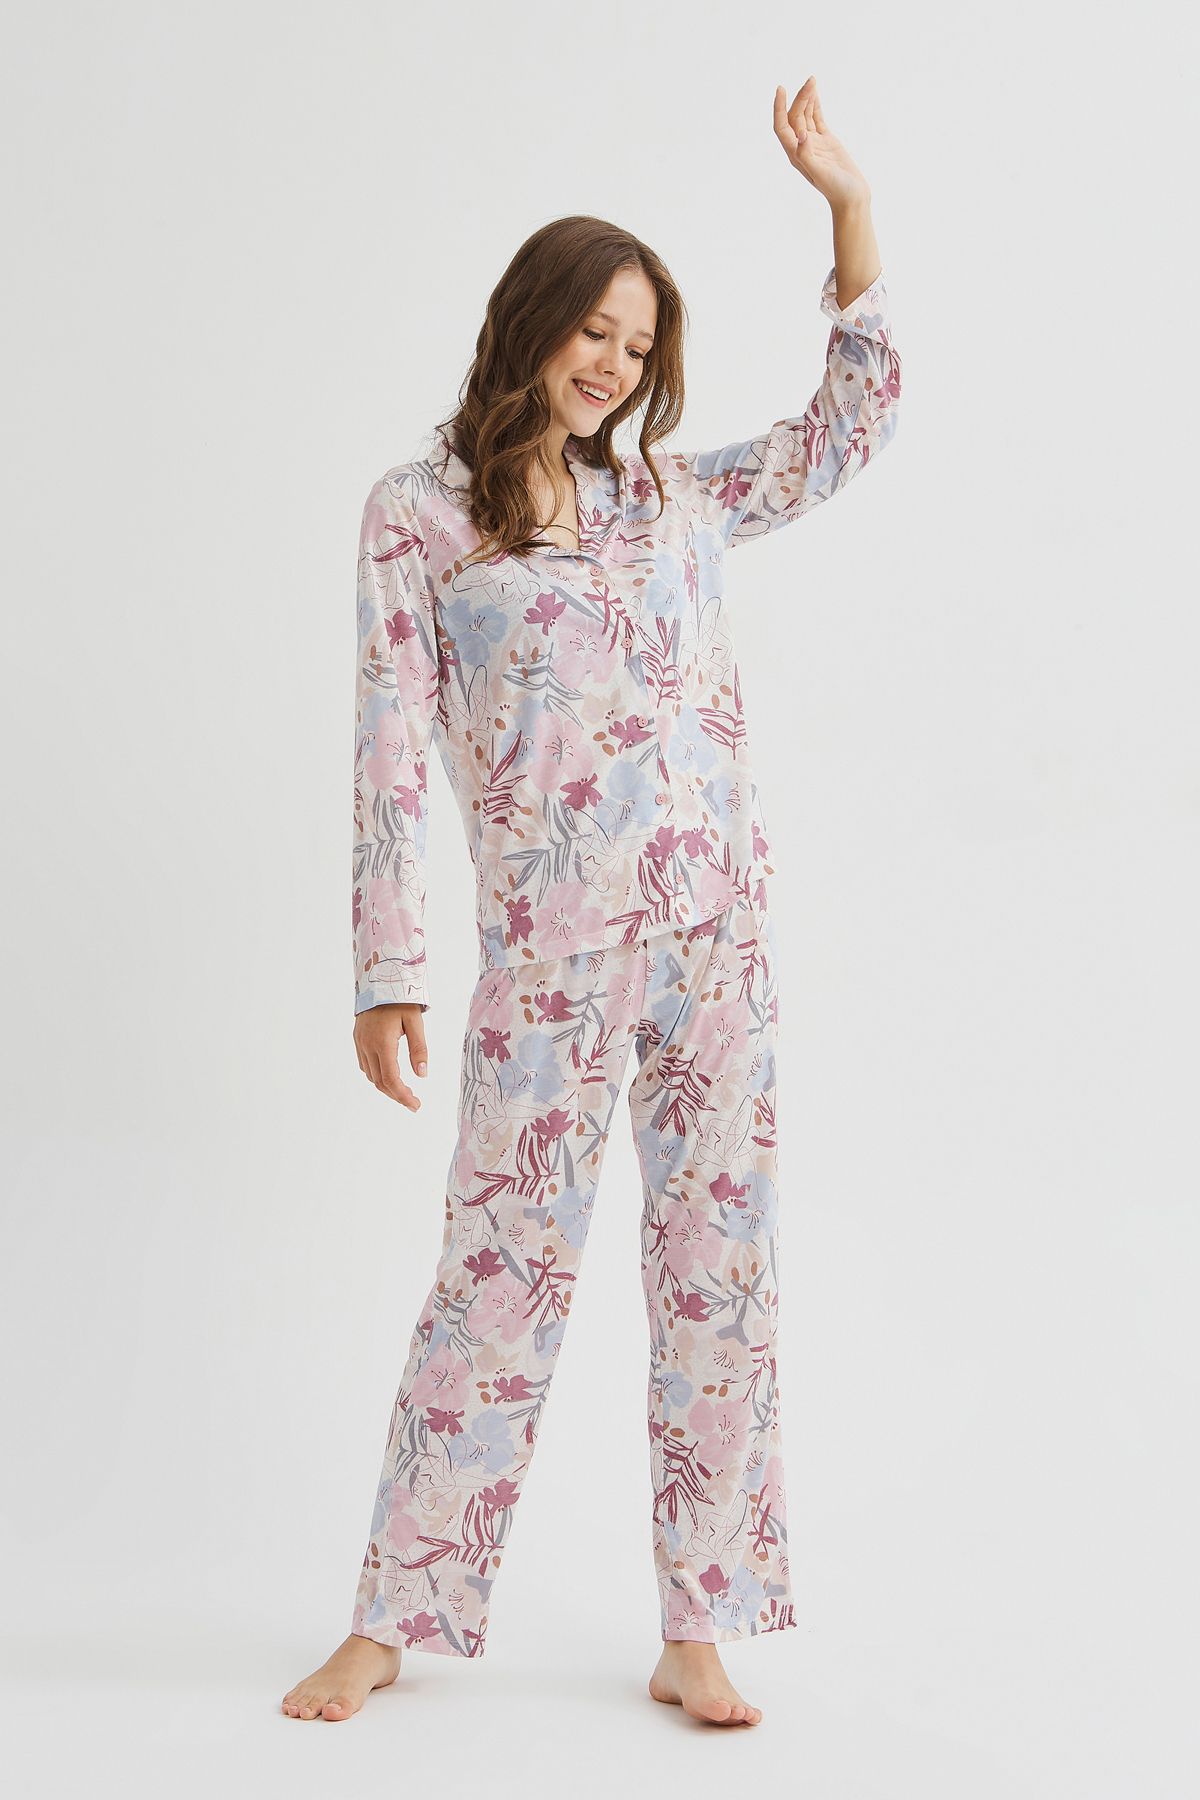 Penti Giant Floral Pijama Takımı